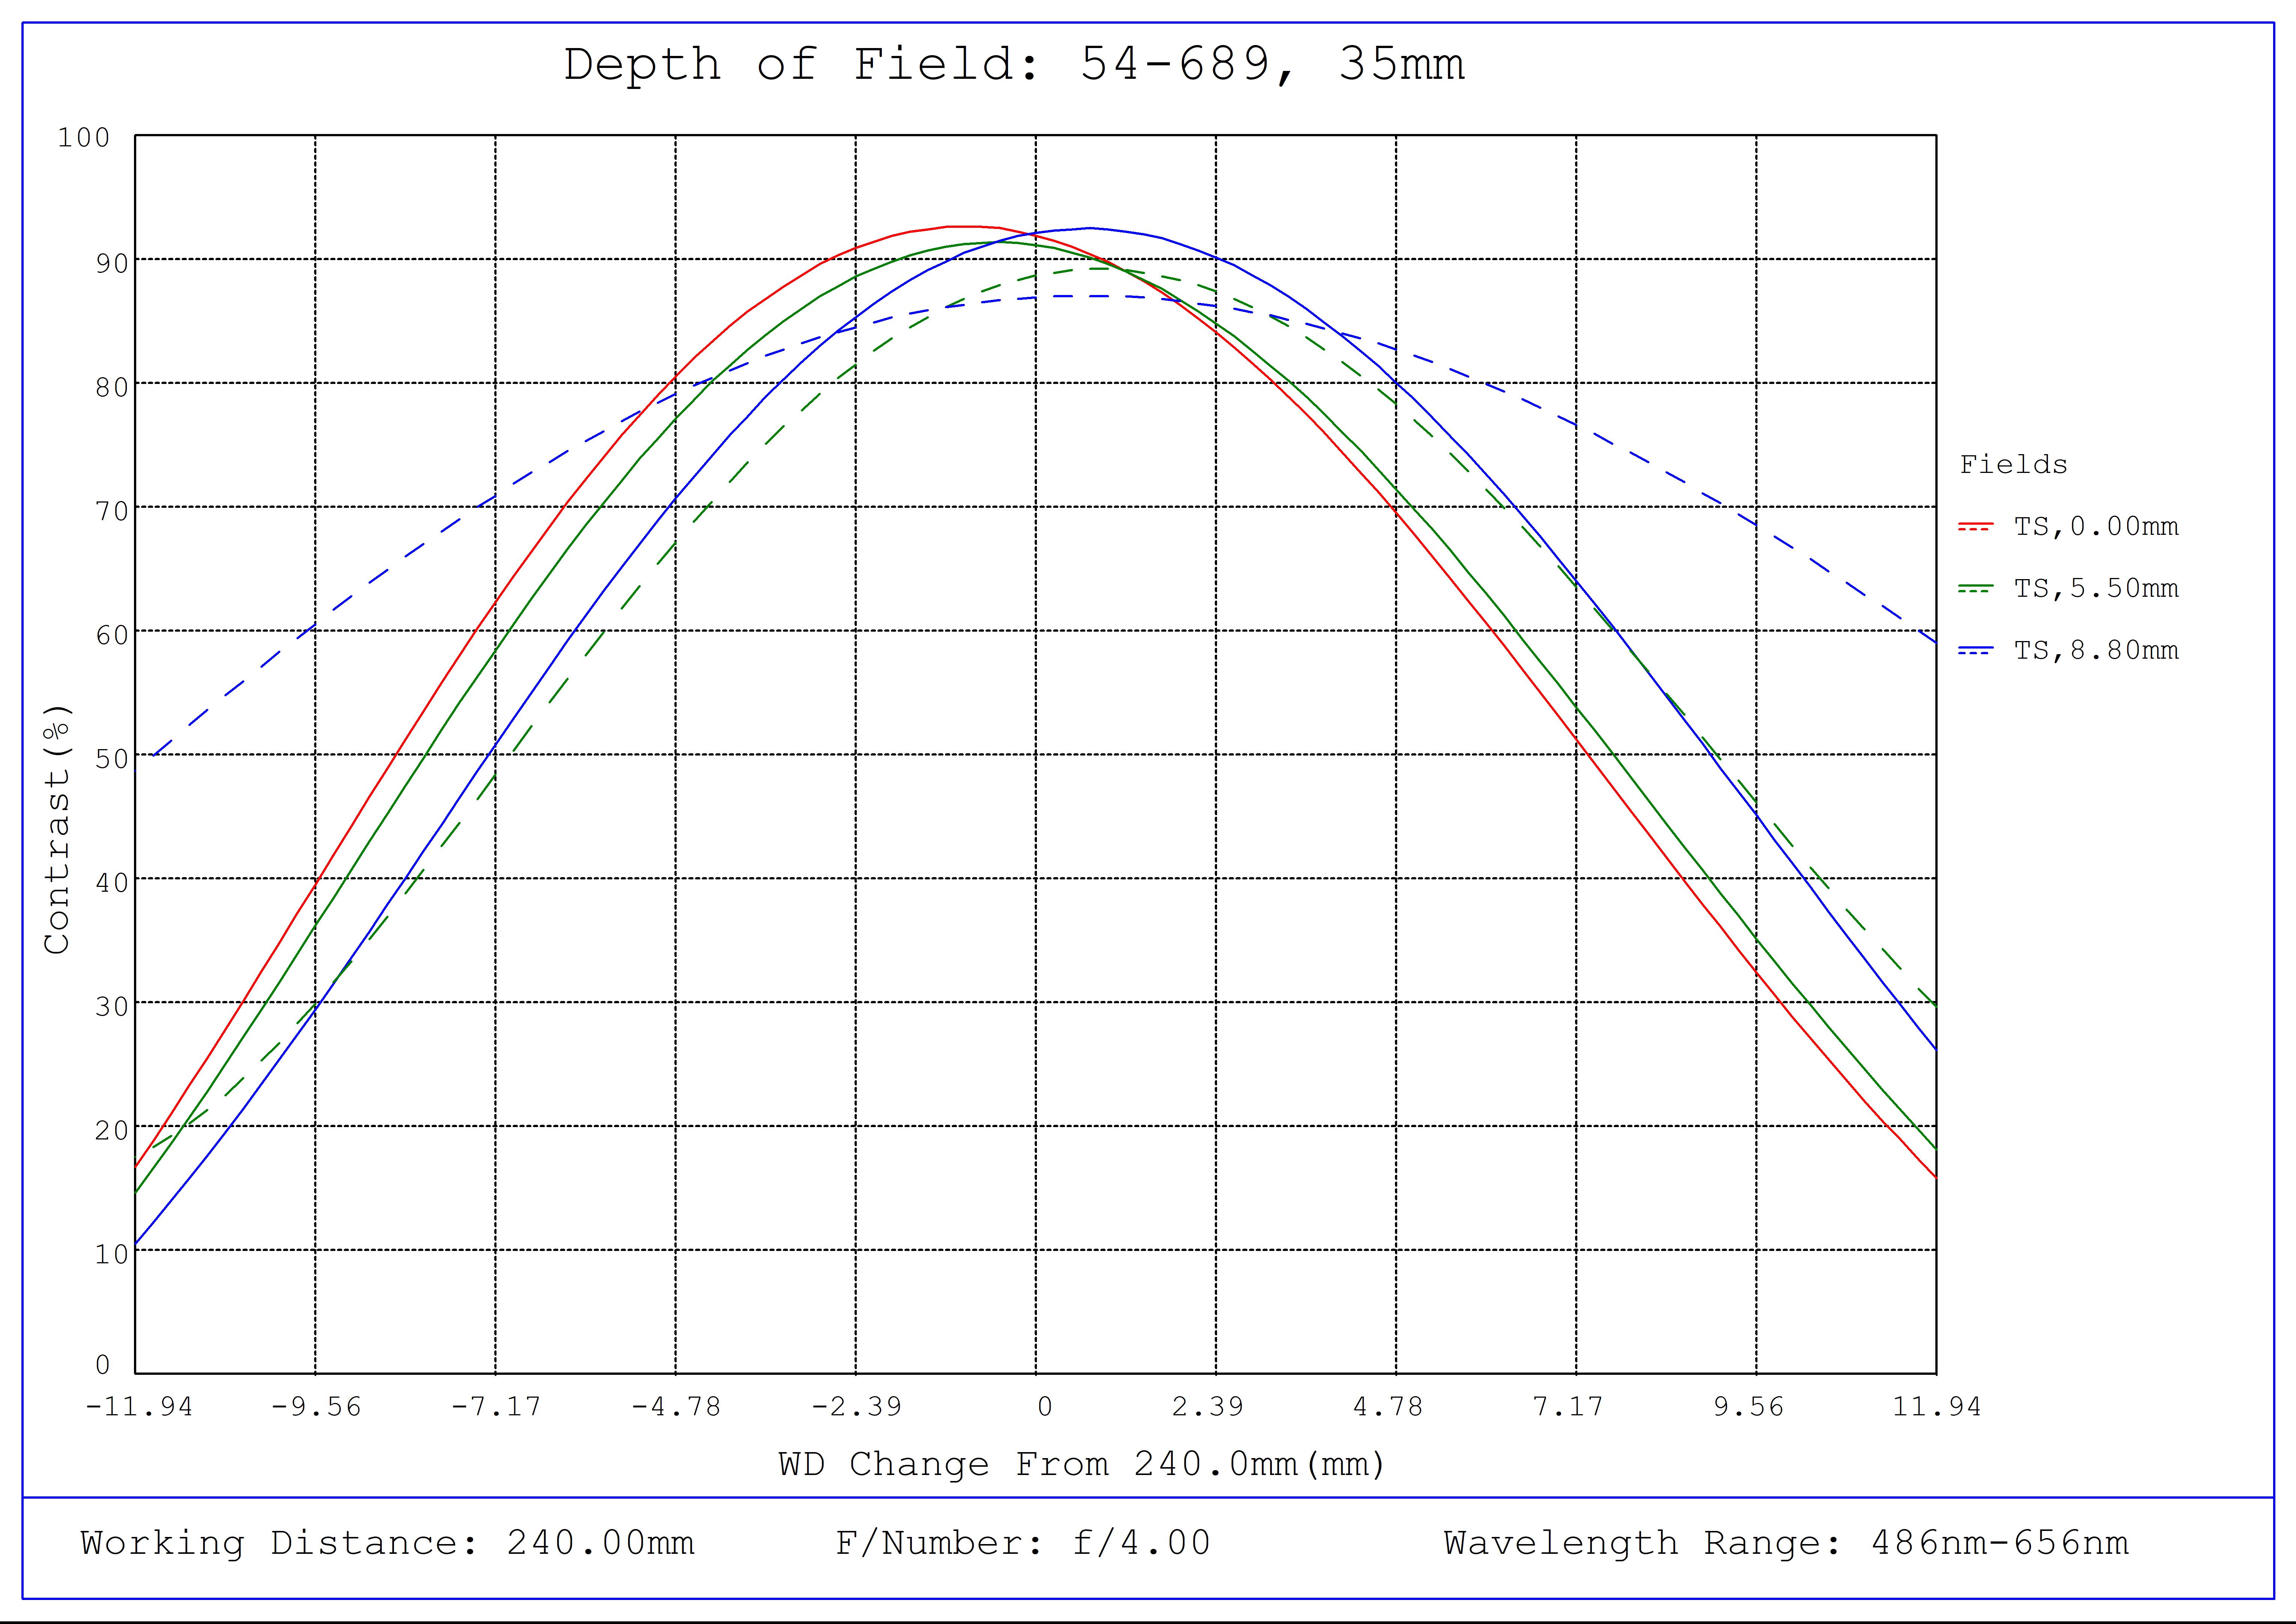 #54-689, 35mm DG Series Fixed Focal Length Lens, Depth of Field Plot, 240mm Working Distance, f4